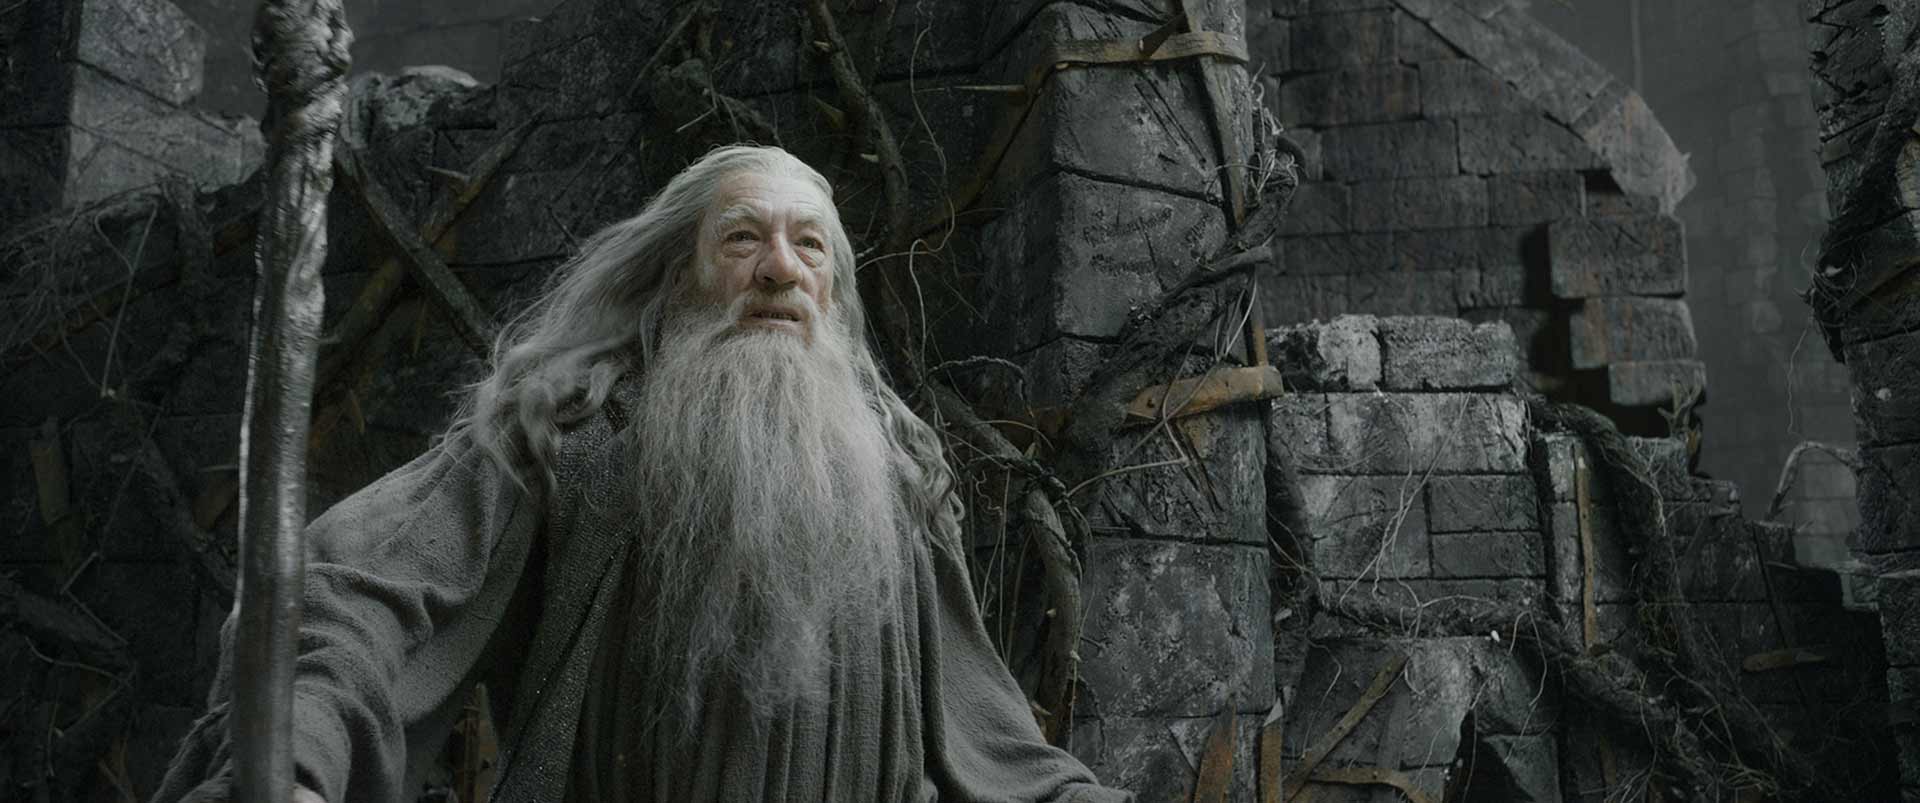 Gandalf Wallpaper Background HD Hobbit Desolation Of Smaug